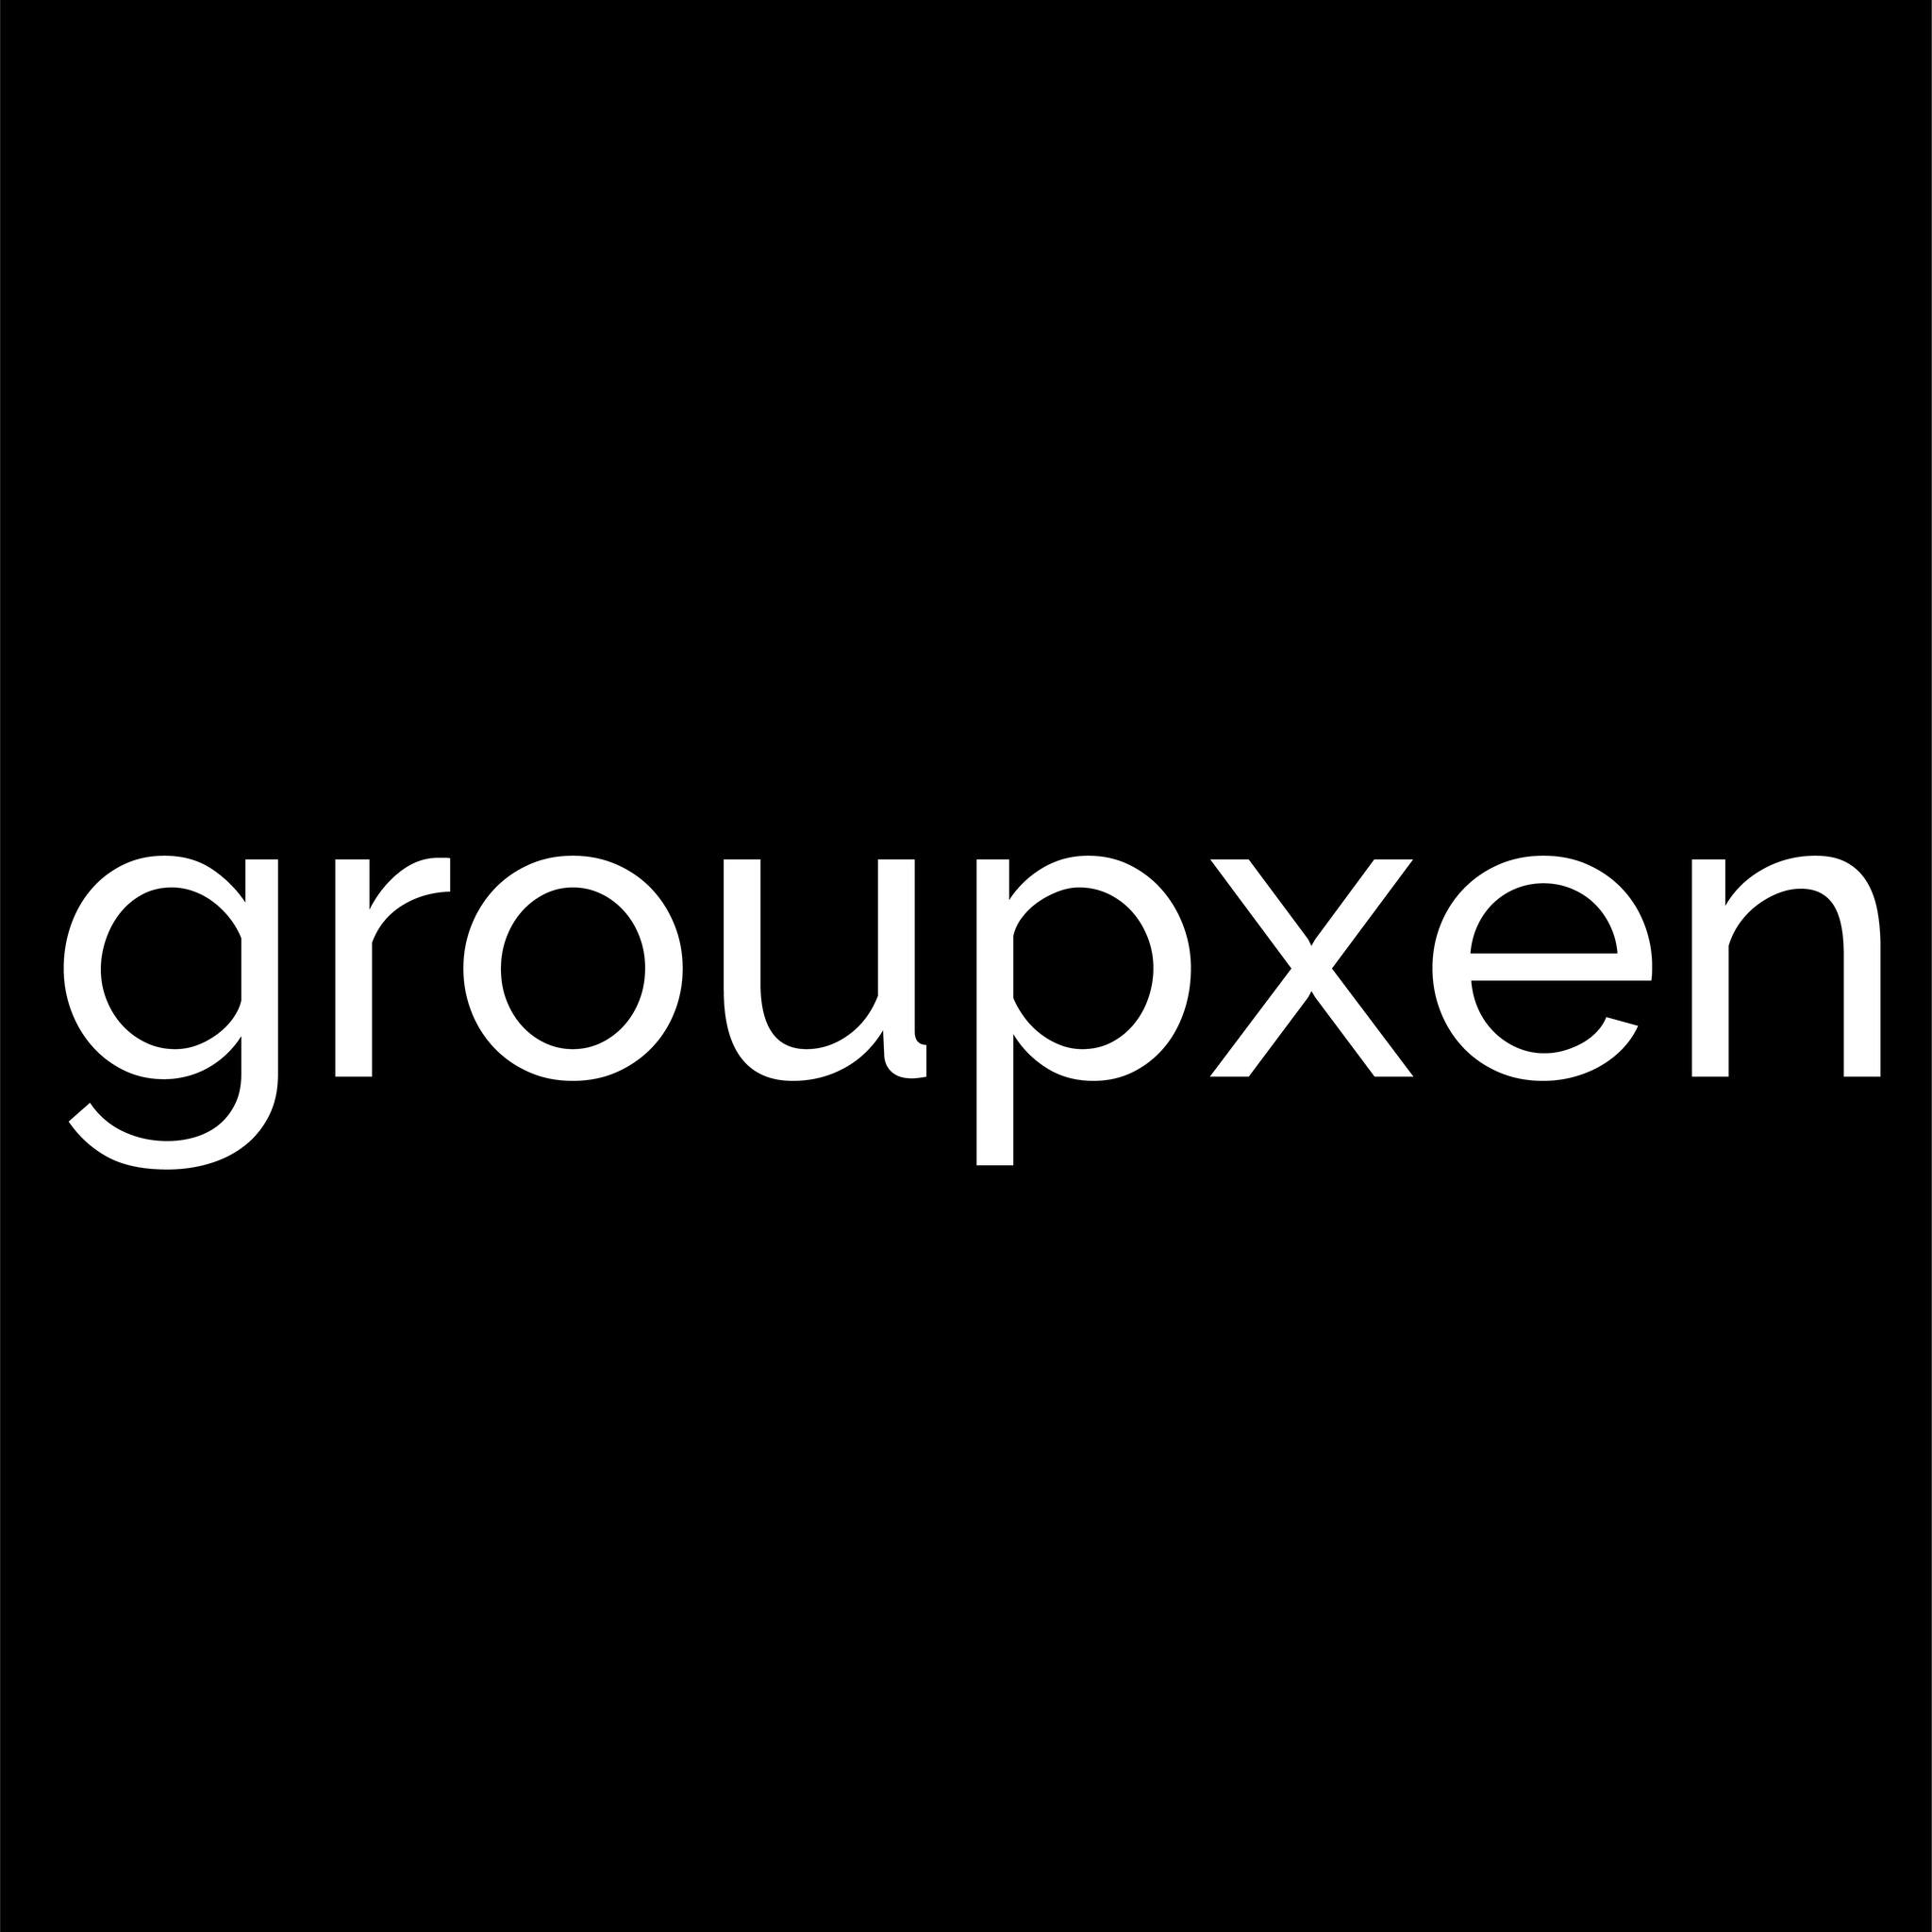 Groupxen